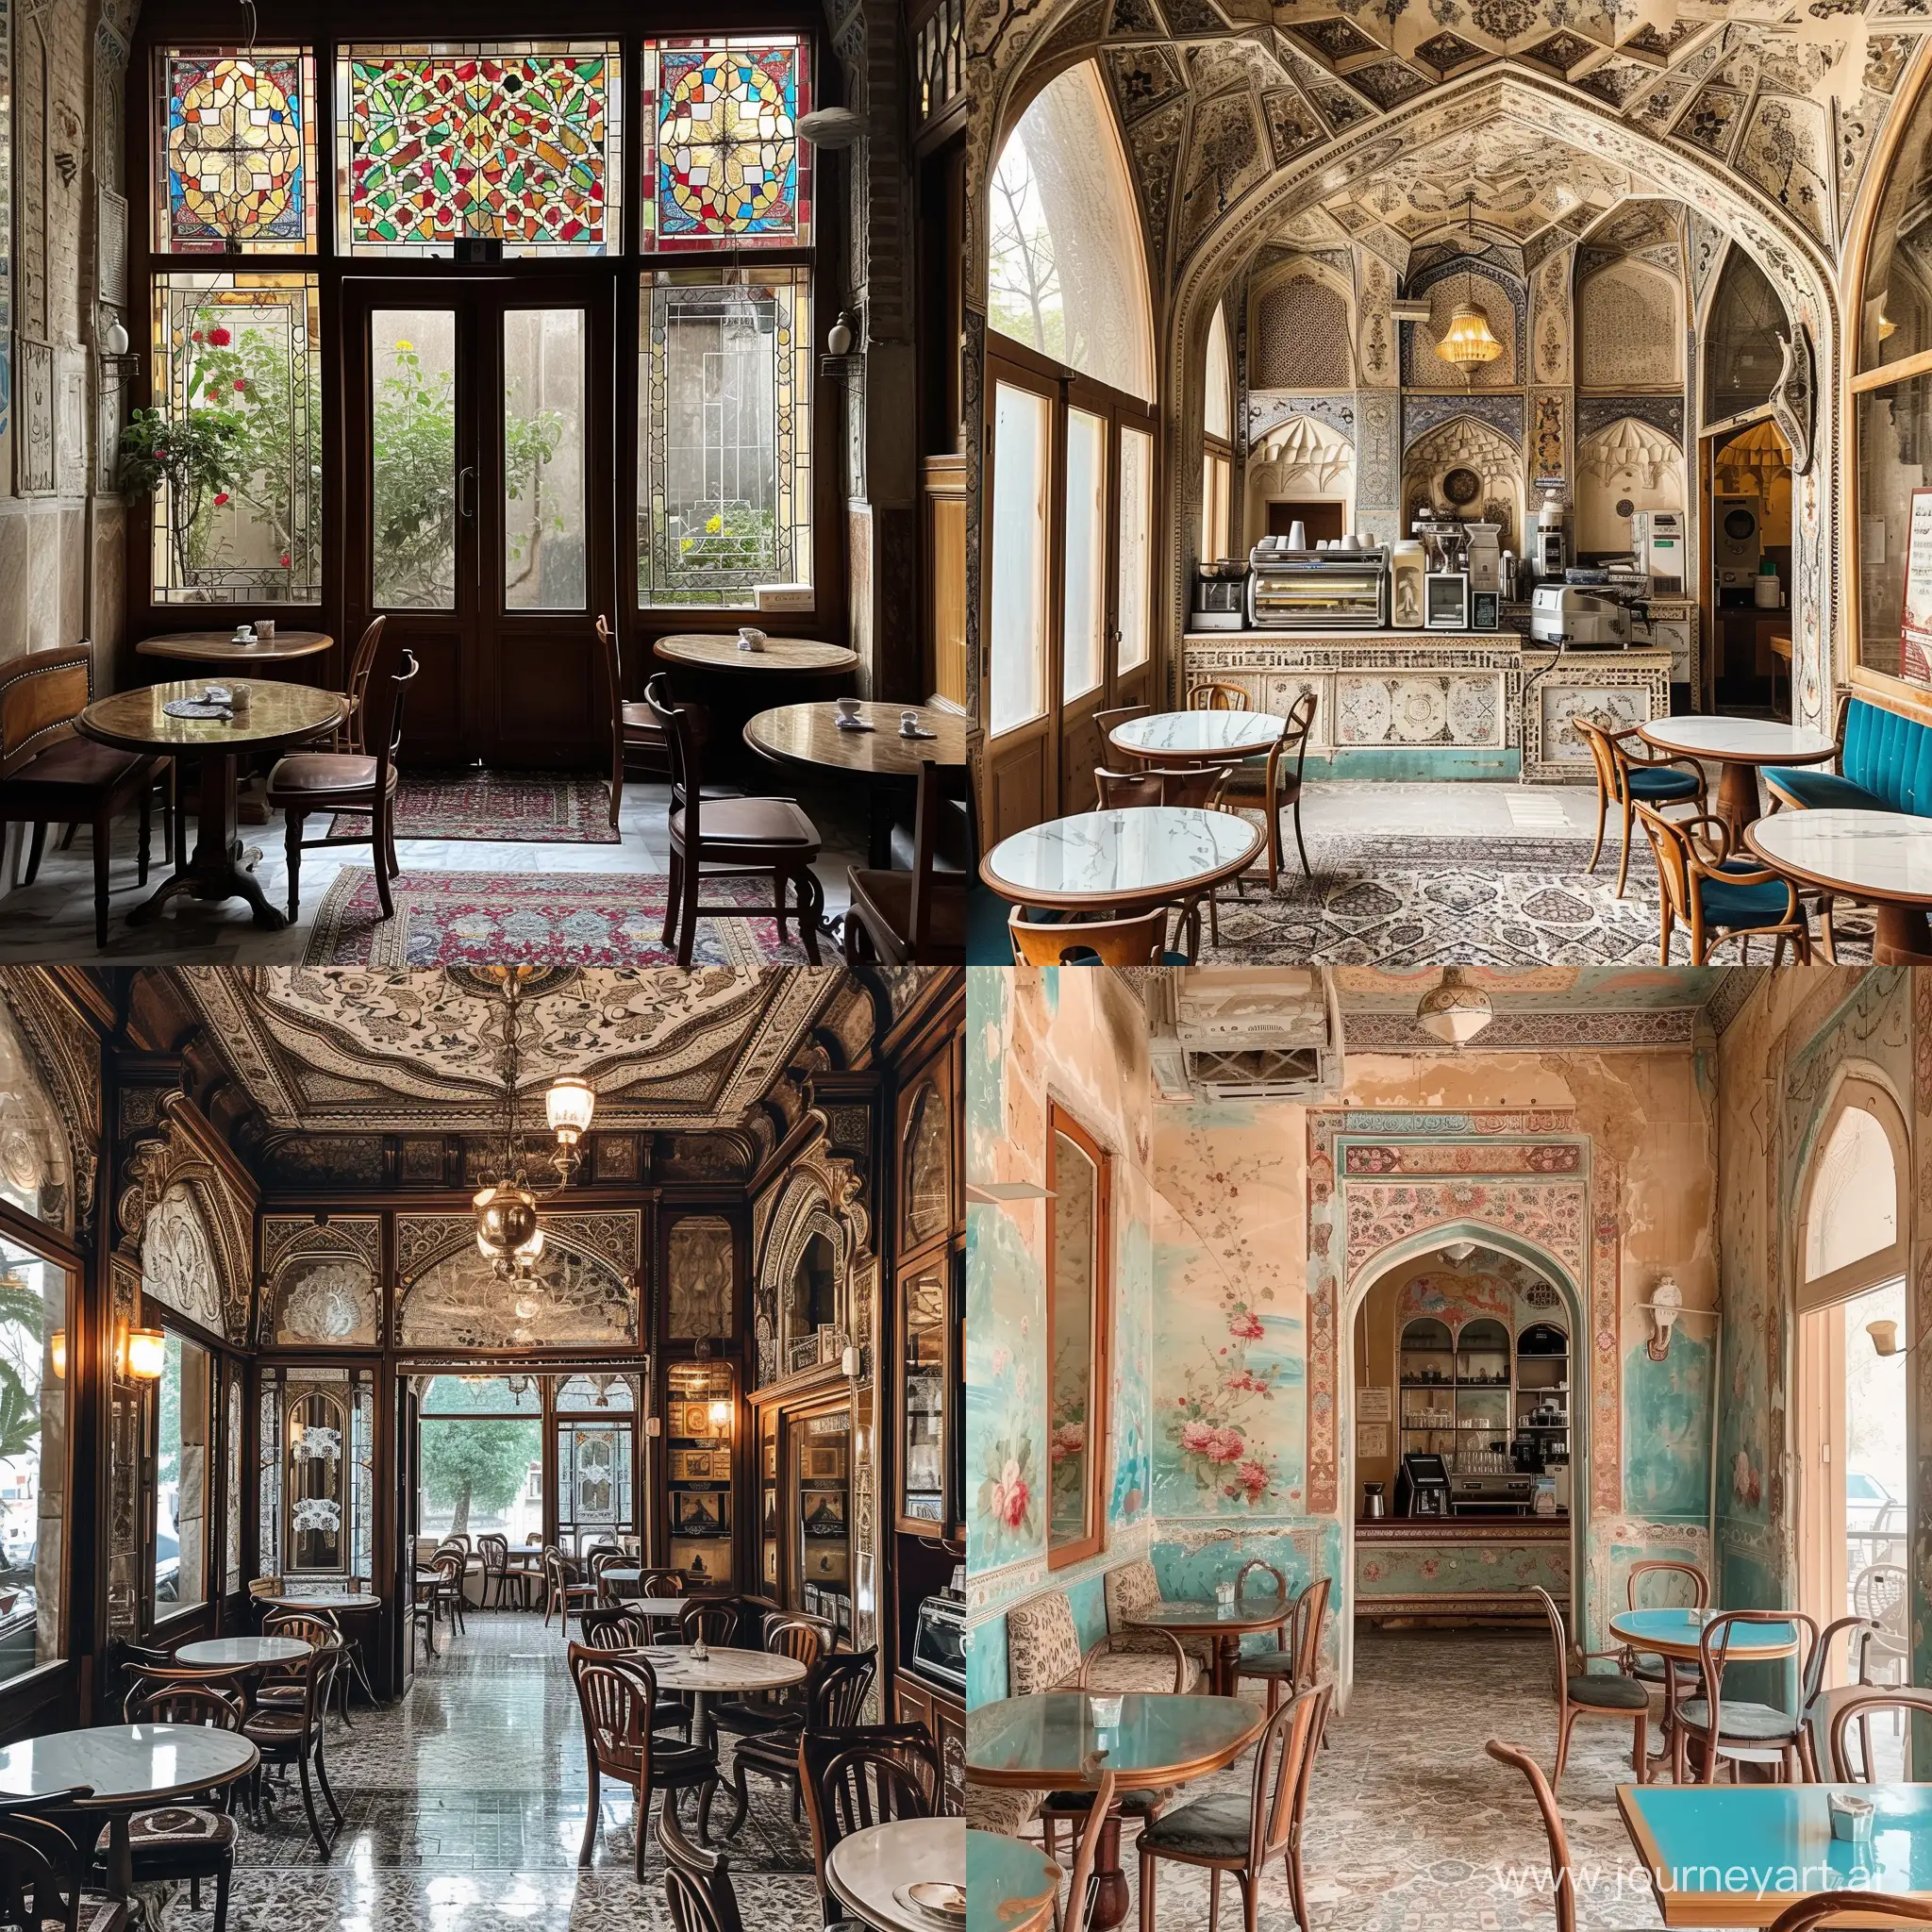 A café with Qajar-era architecture in Iran